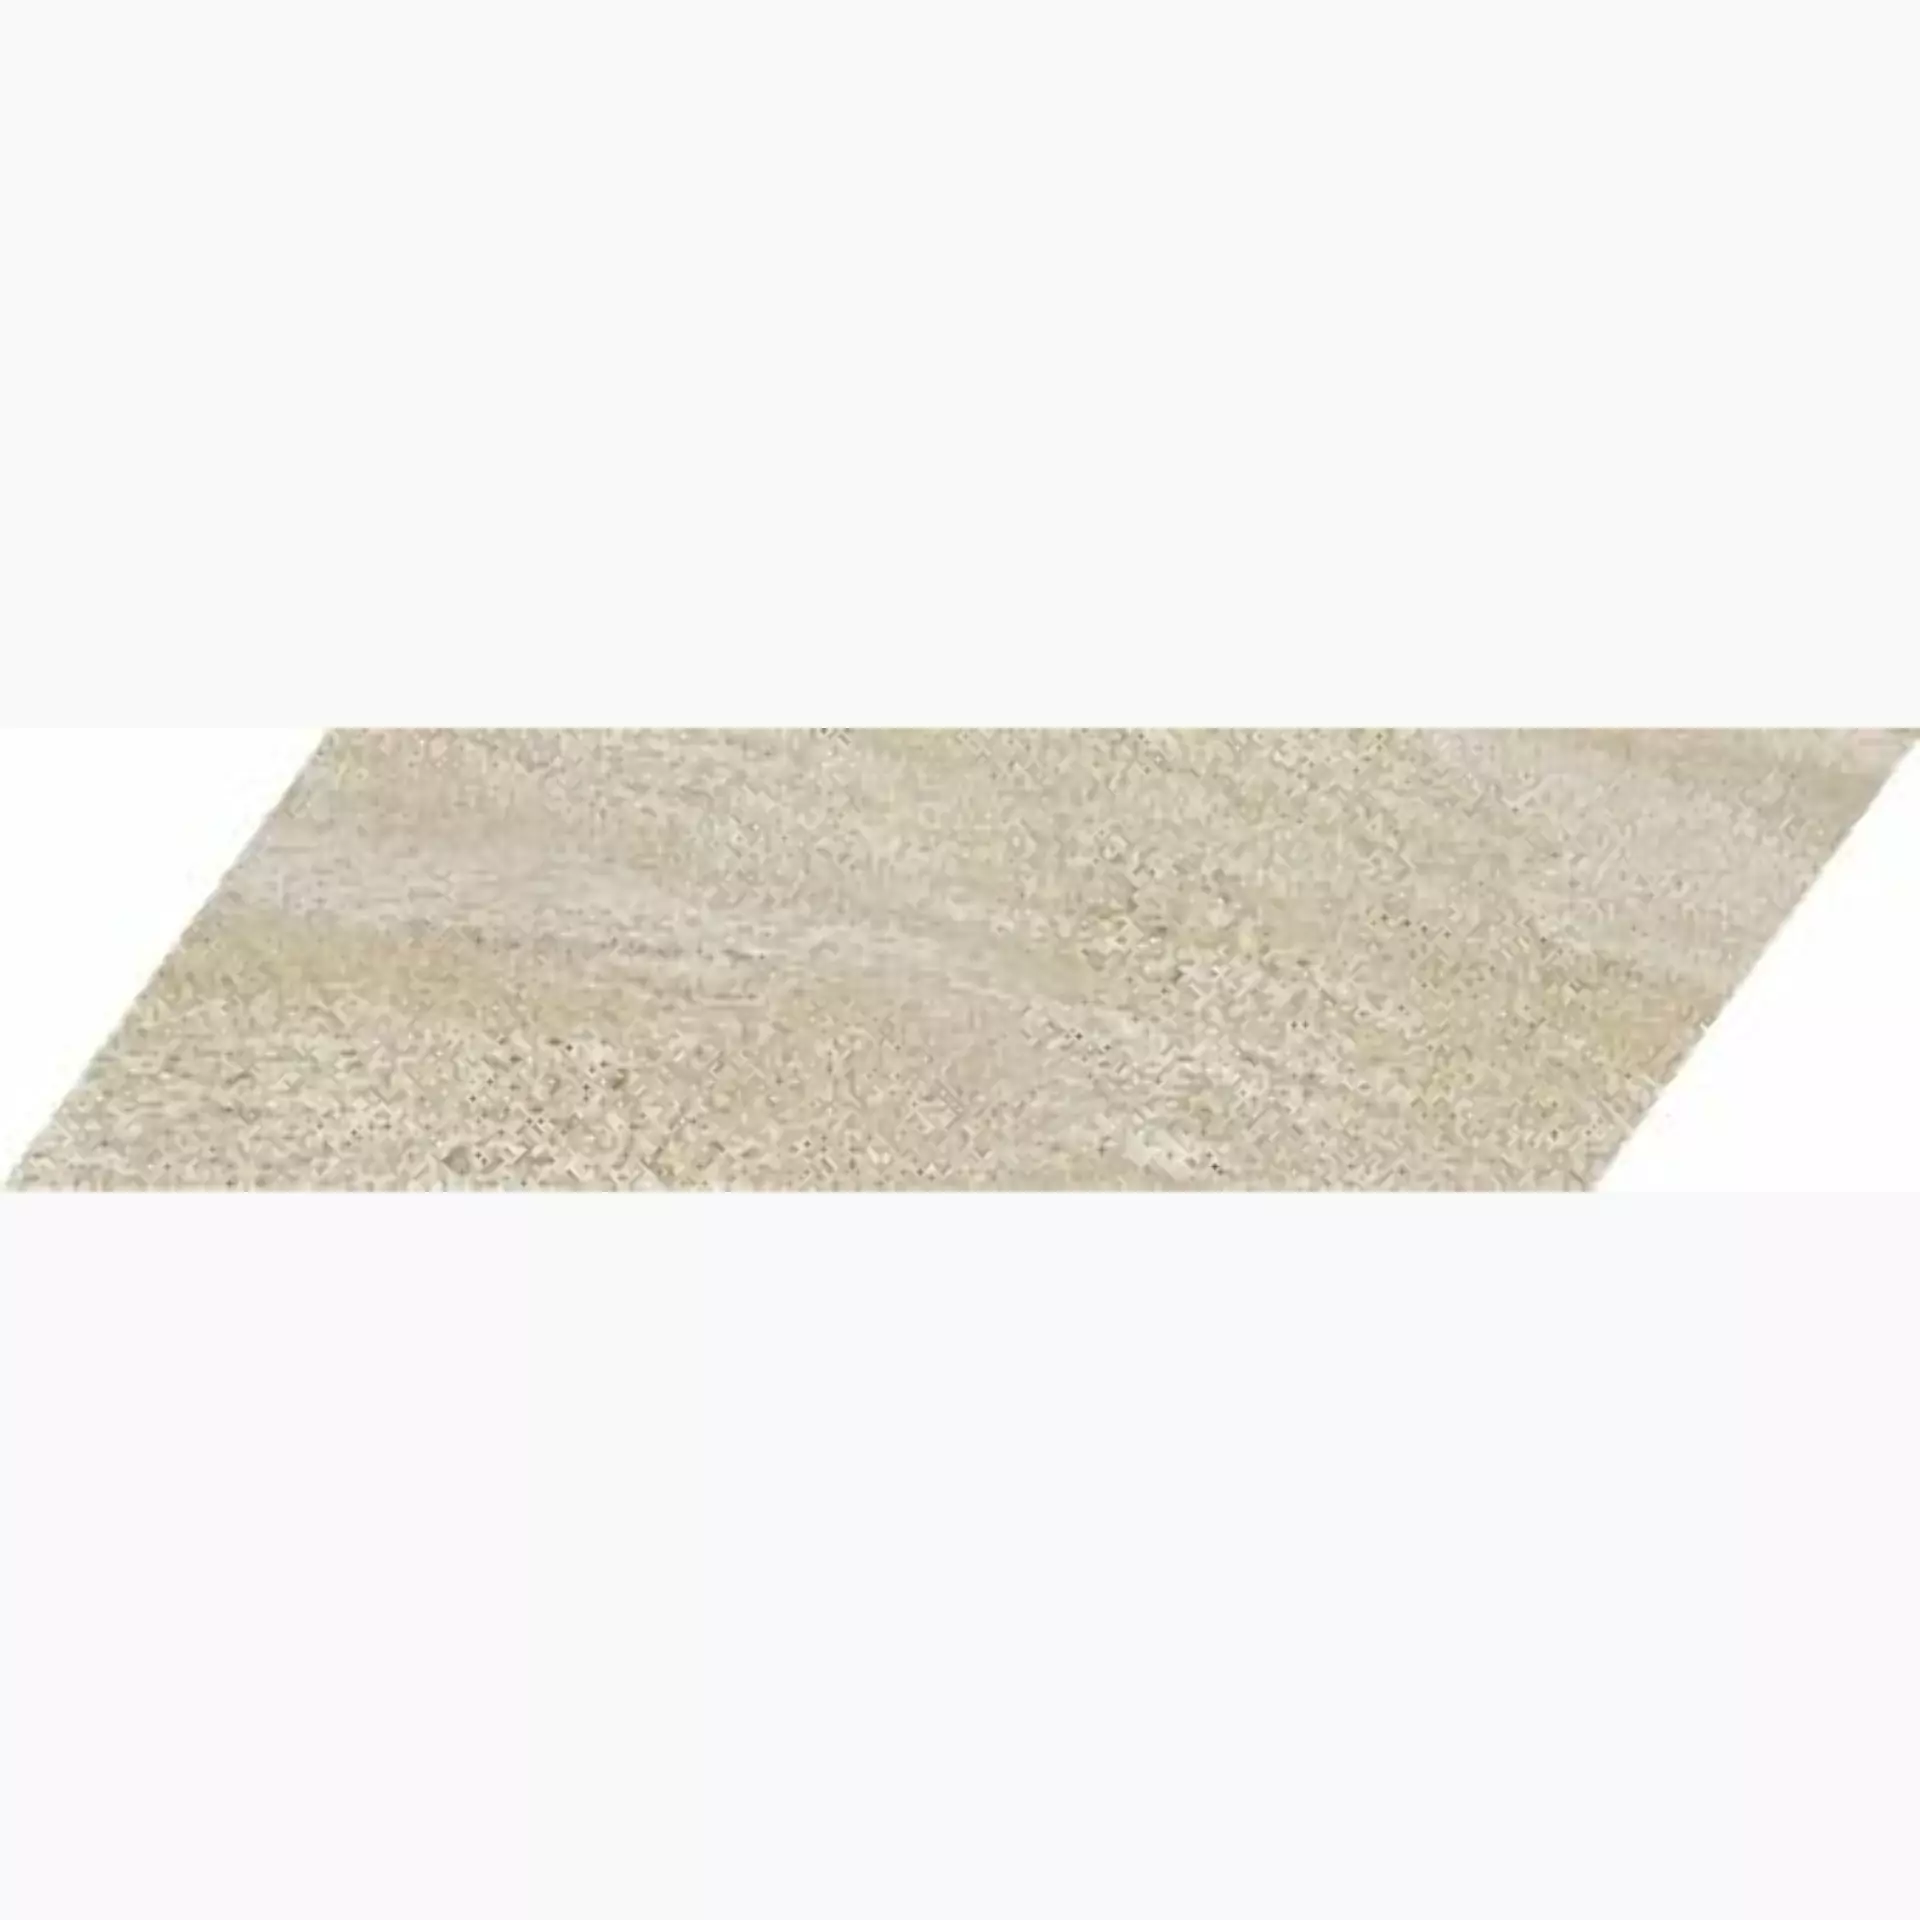 Casalgrande Ulivo Panna Naturale – Matt Chevron 2851250 29,5x31cm rectified 9mm